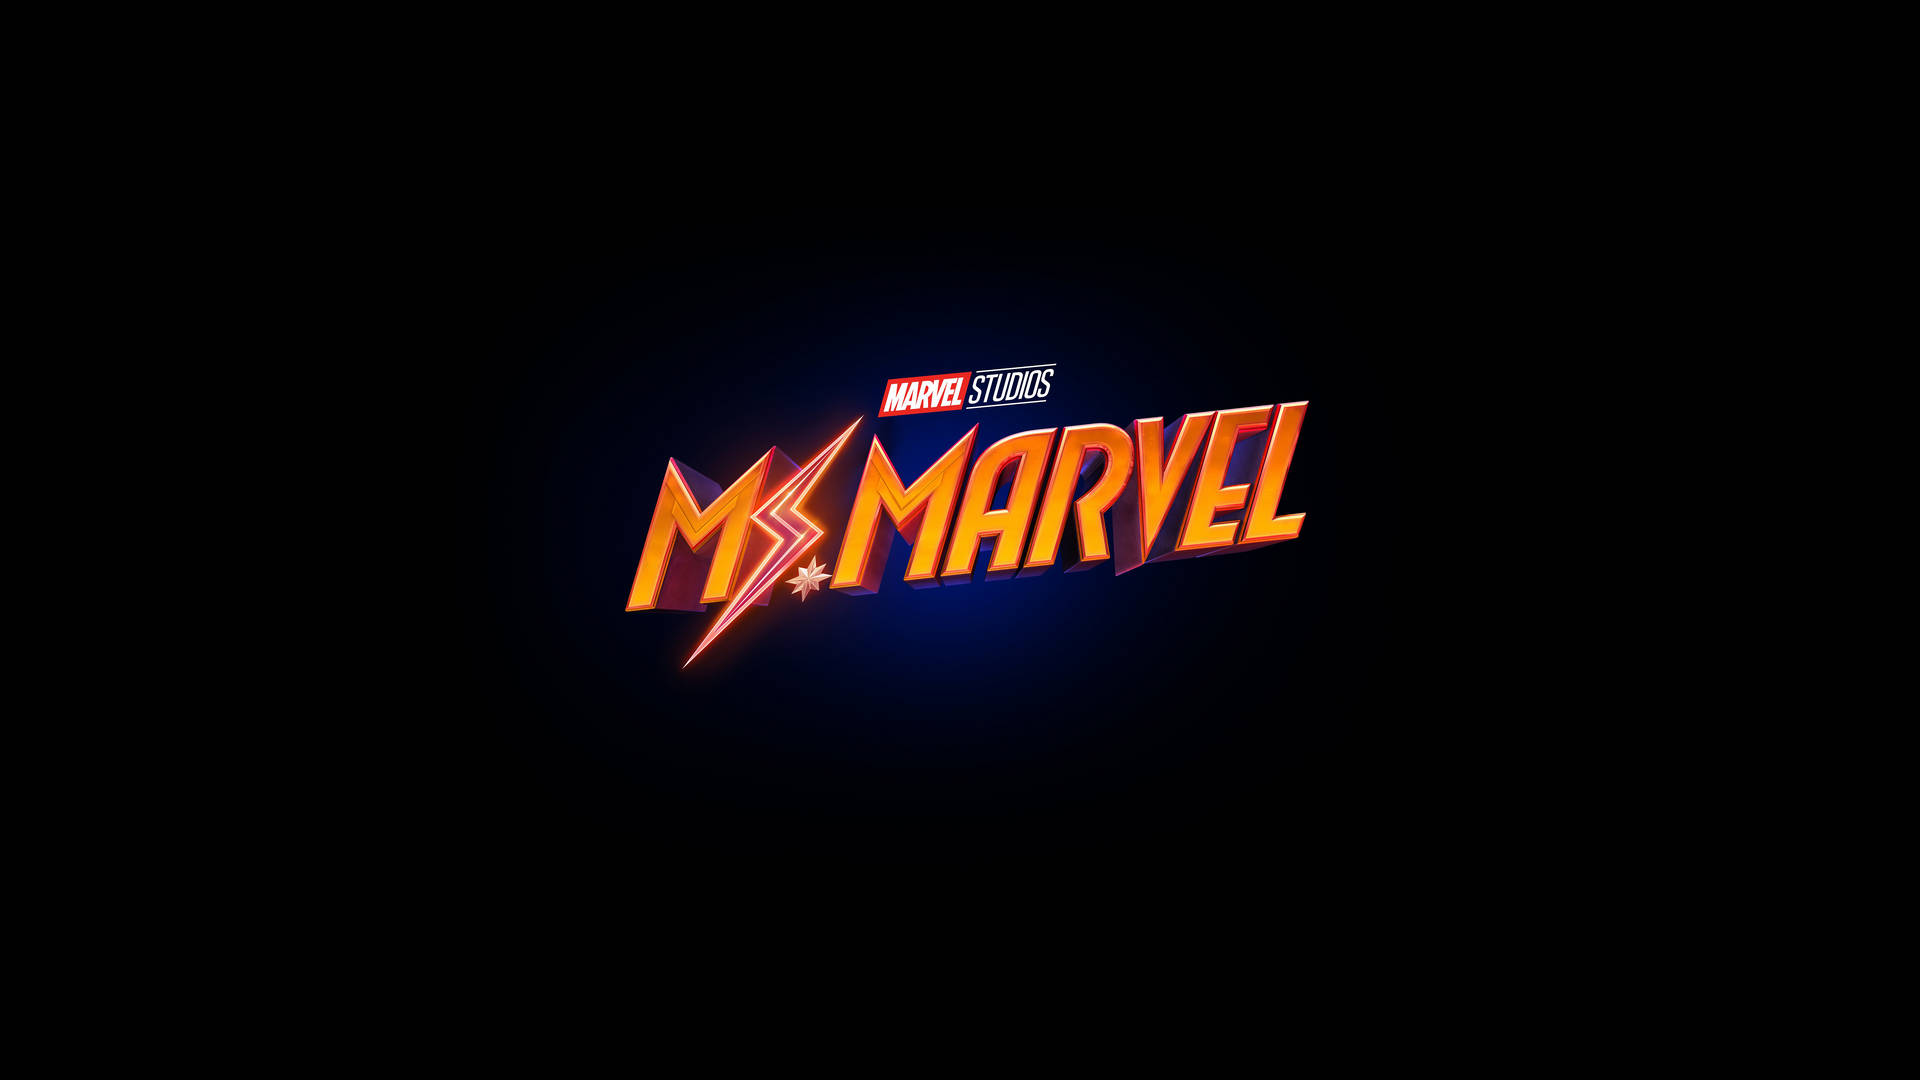 Ms. Marvel Logo Wallpaper